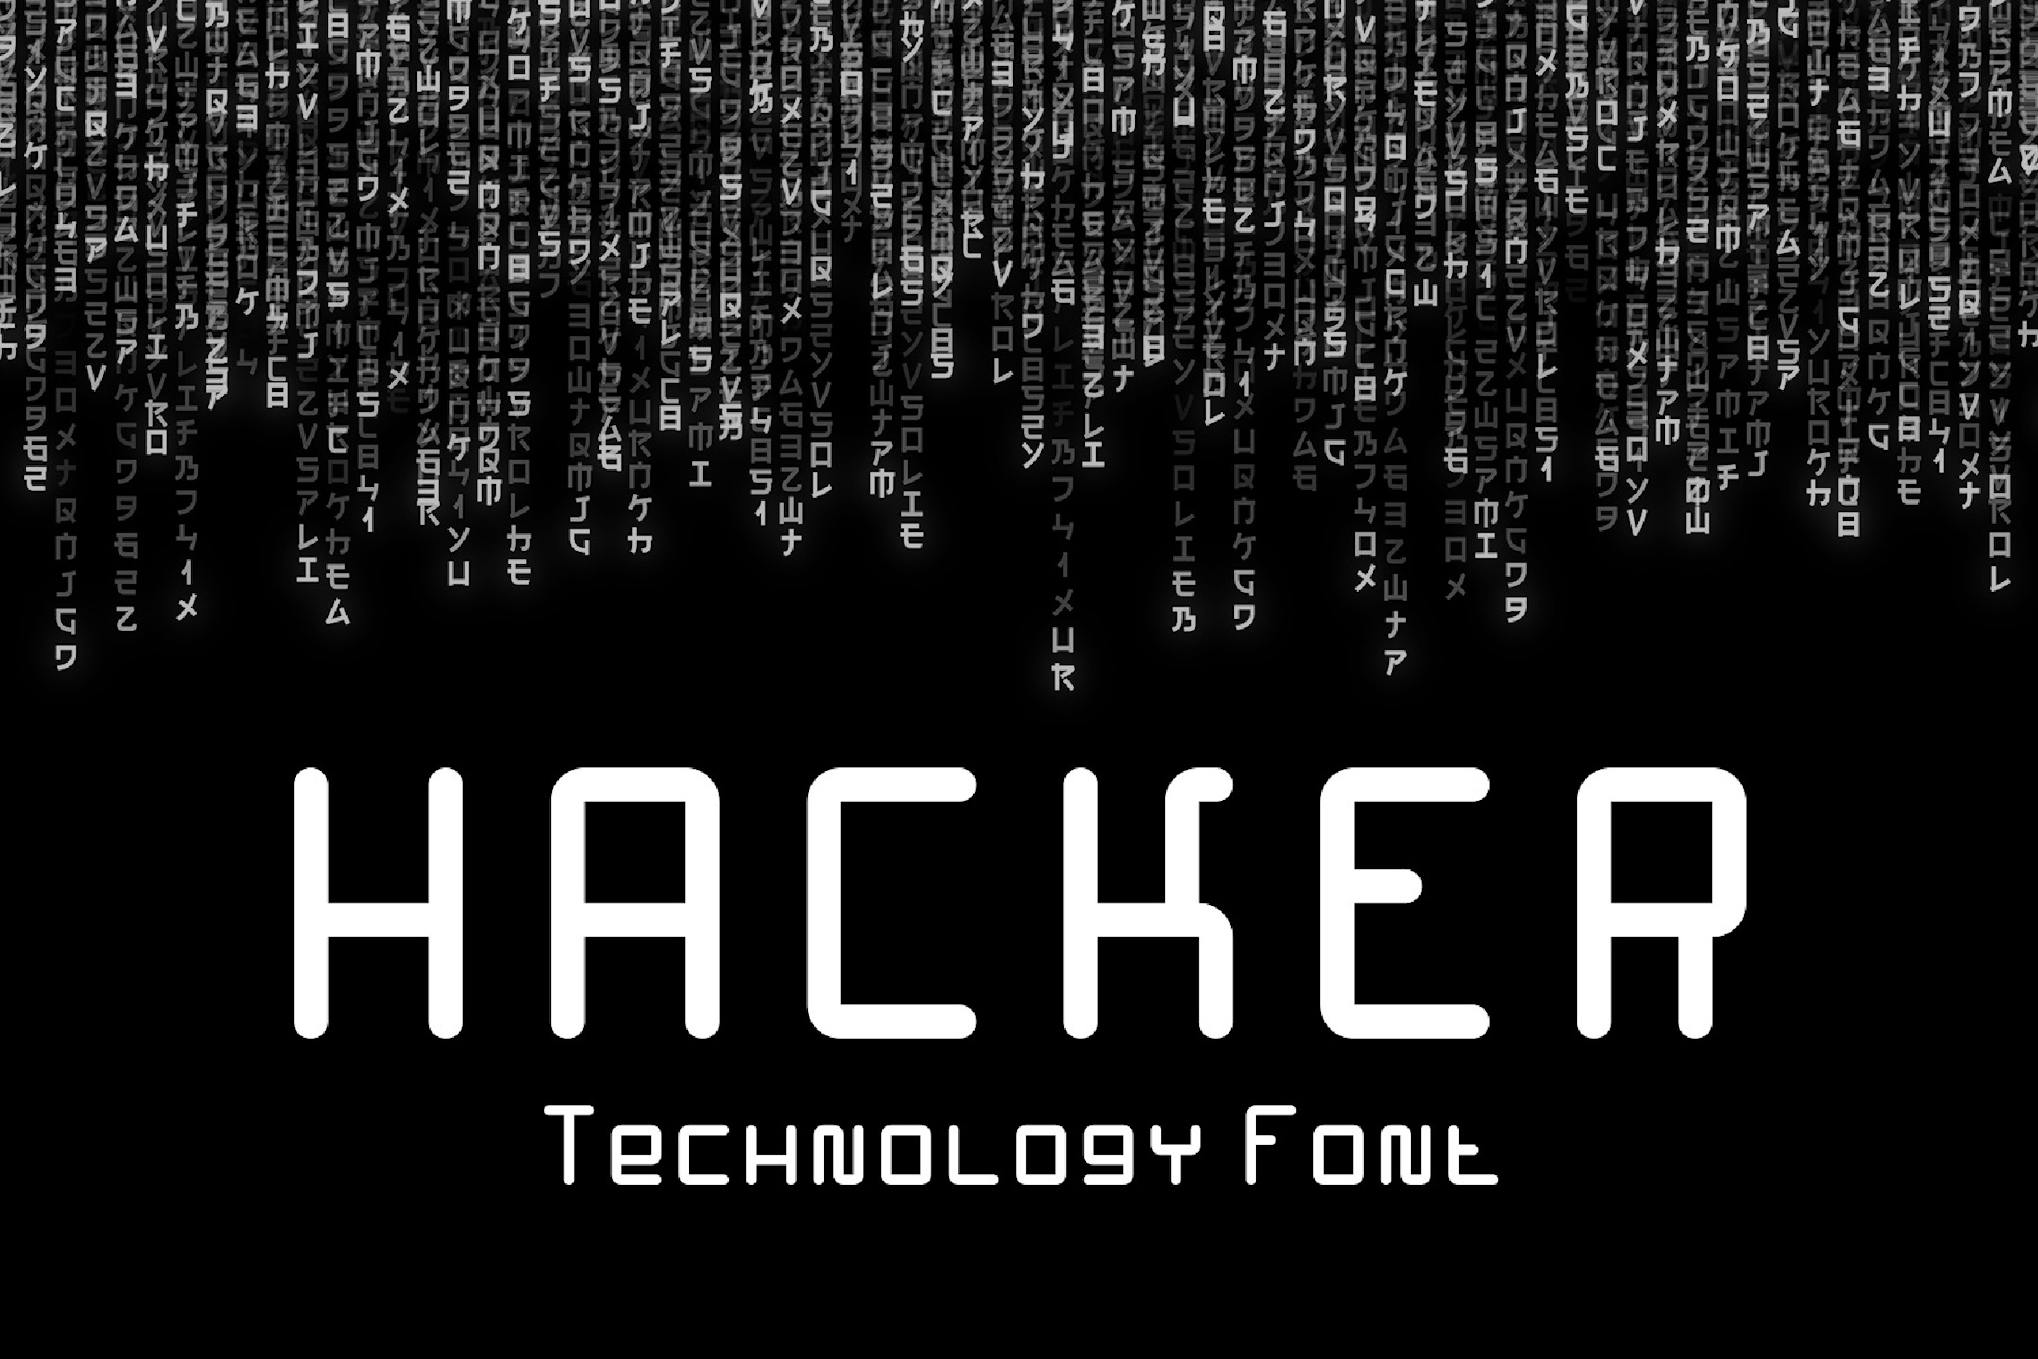 Hacker - Technology Font